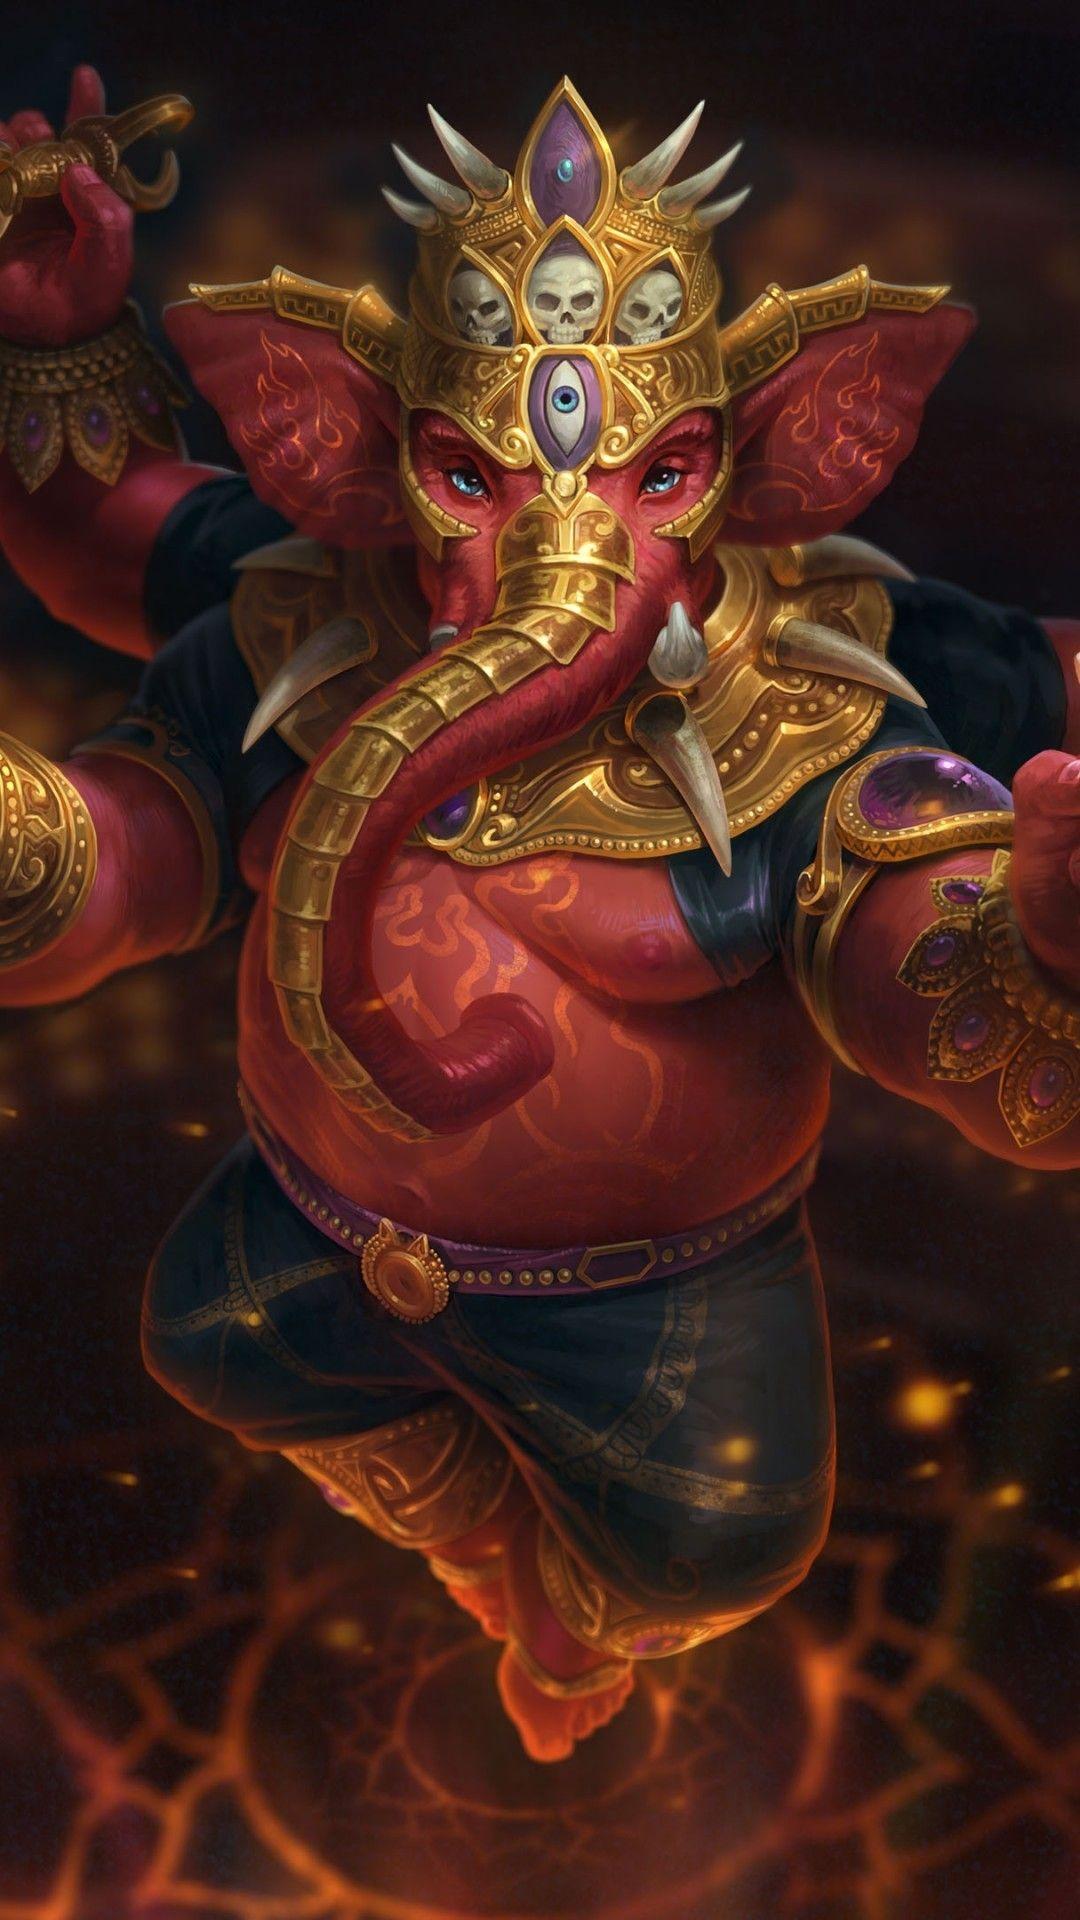 Premium AI Image | Wallpaper Ganesha The Lord Of Wisdom Hindu God Ganesha